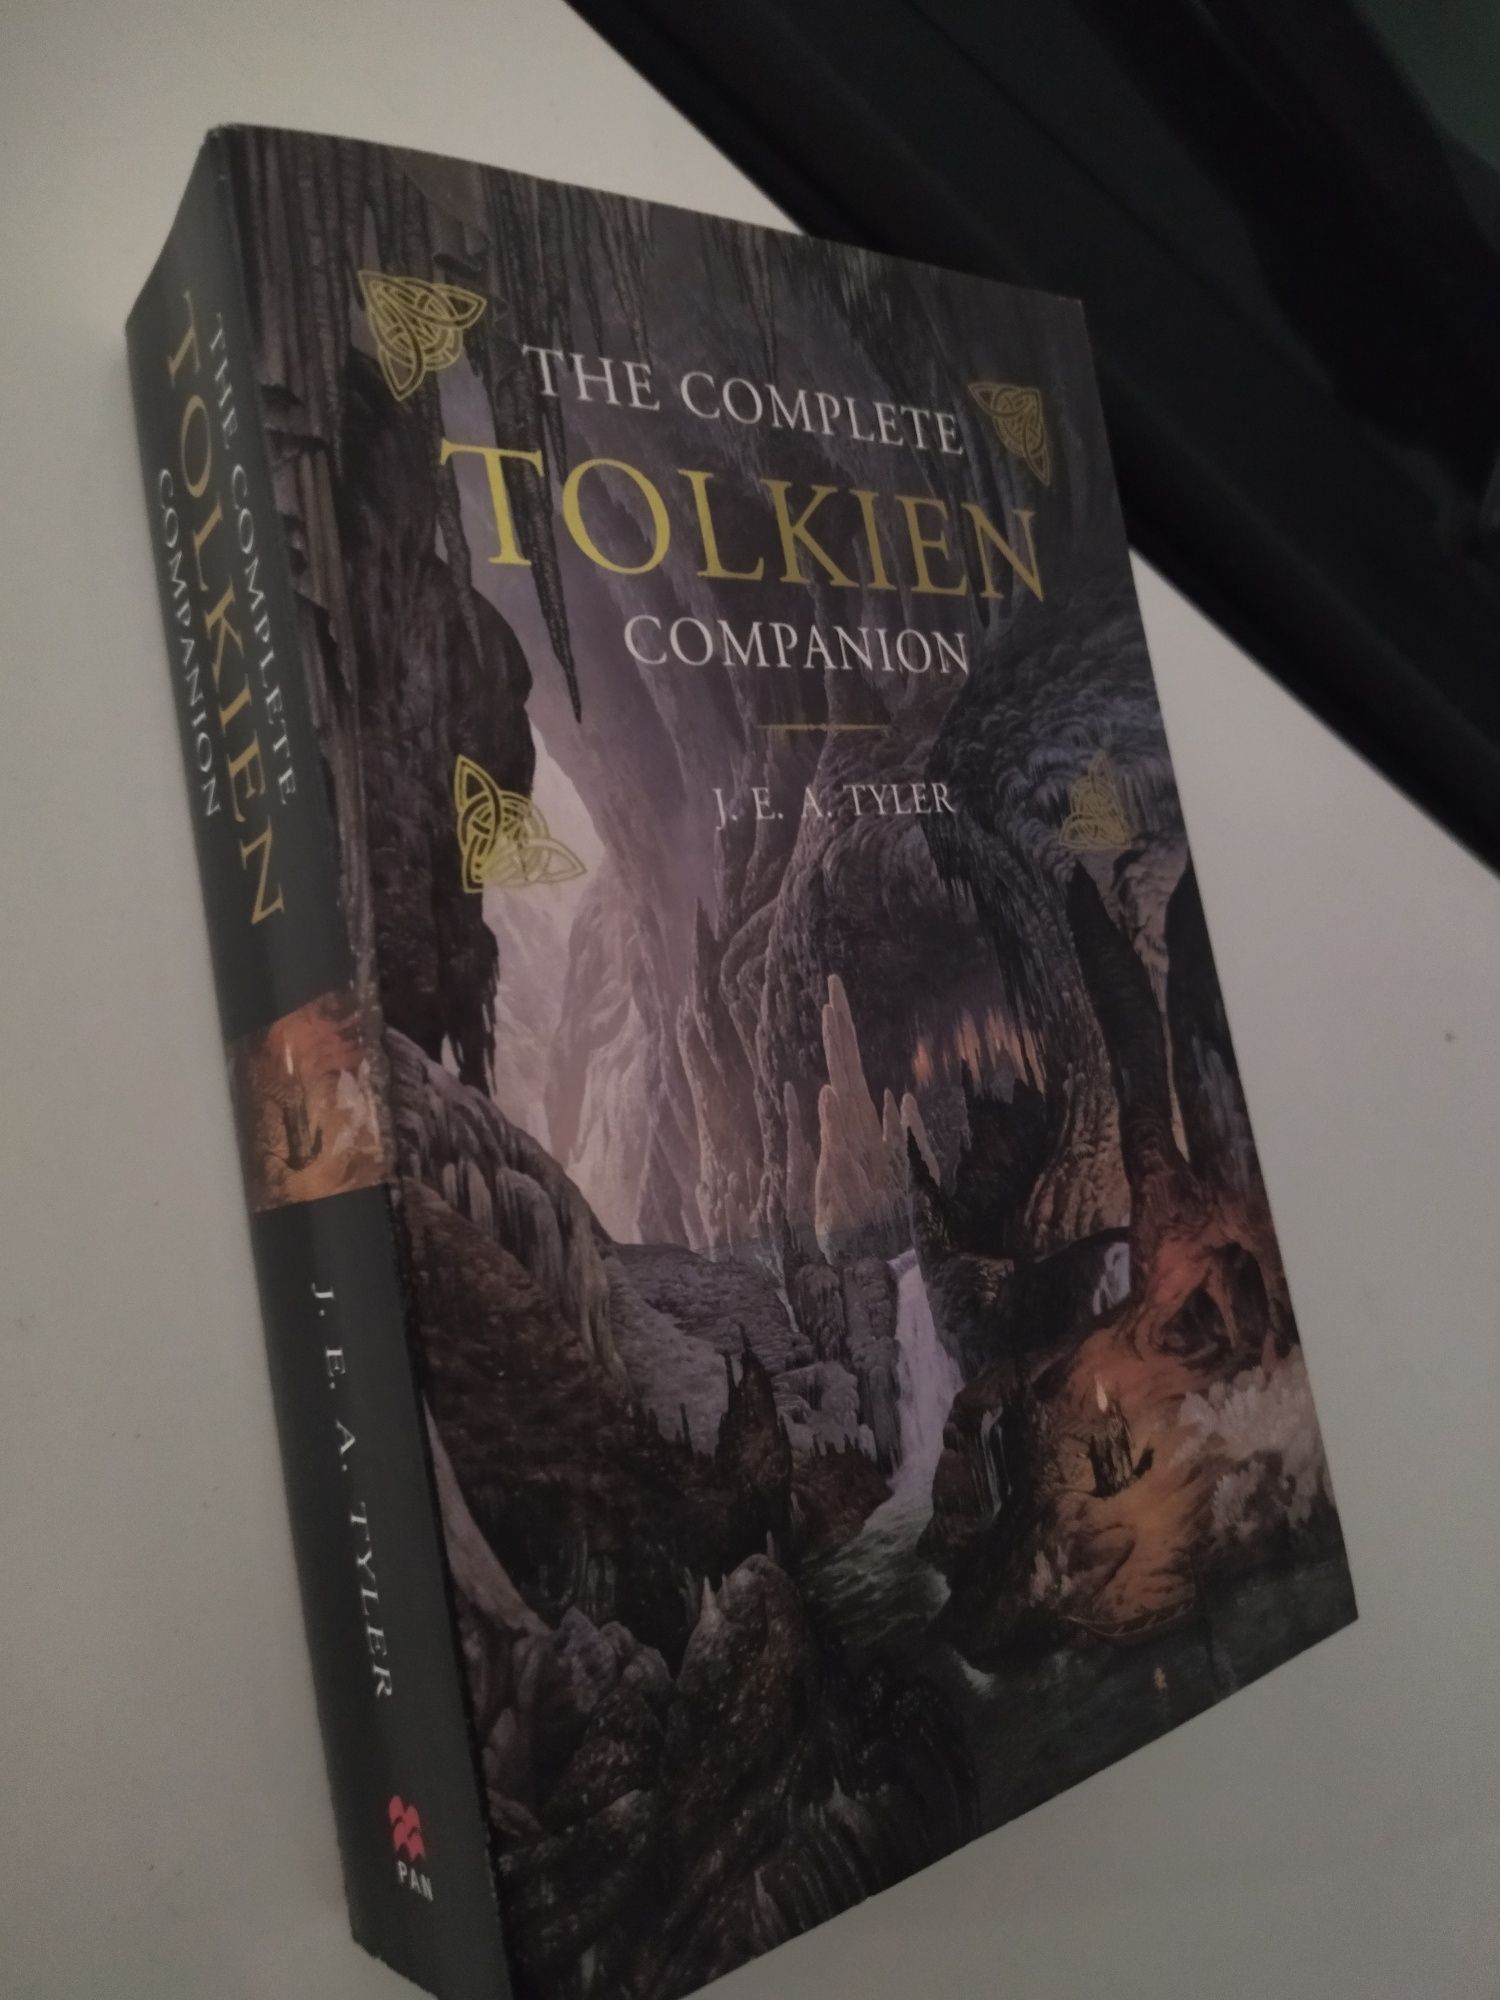 The Complete Tolkien companion